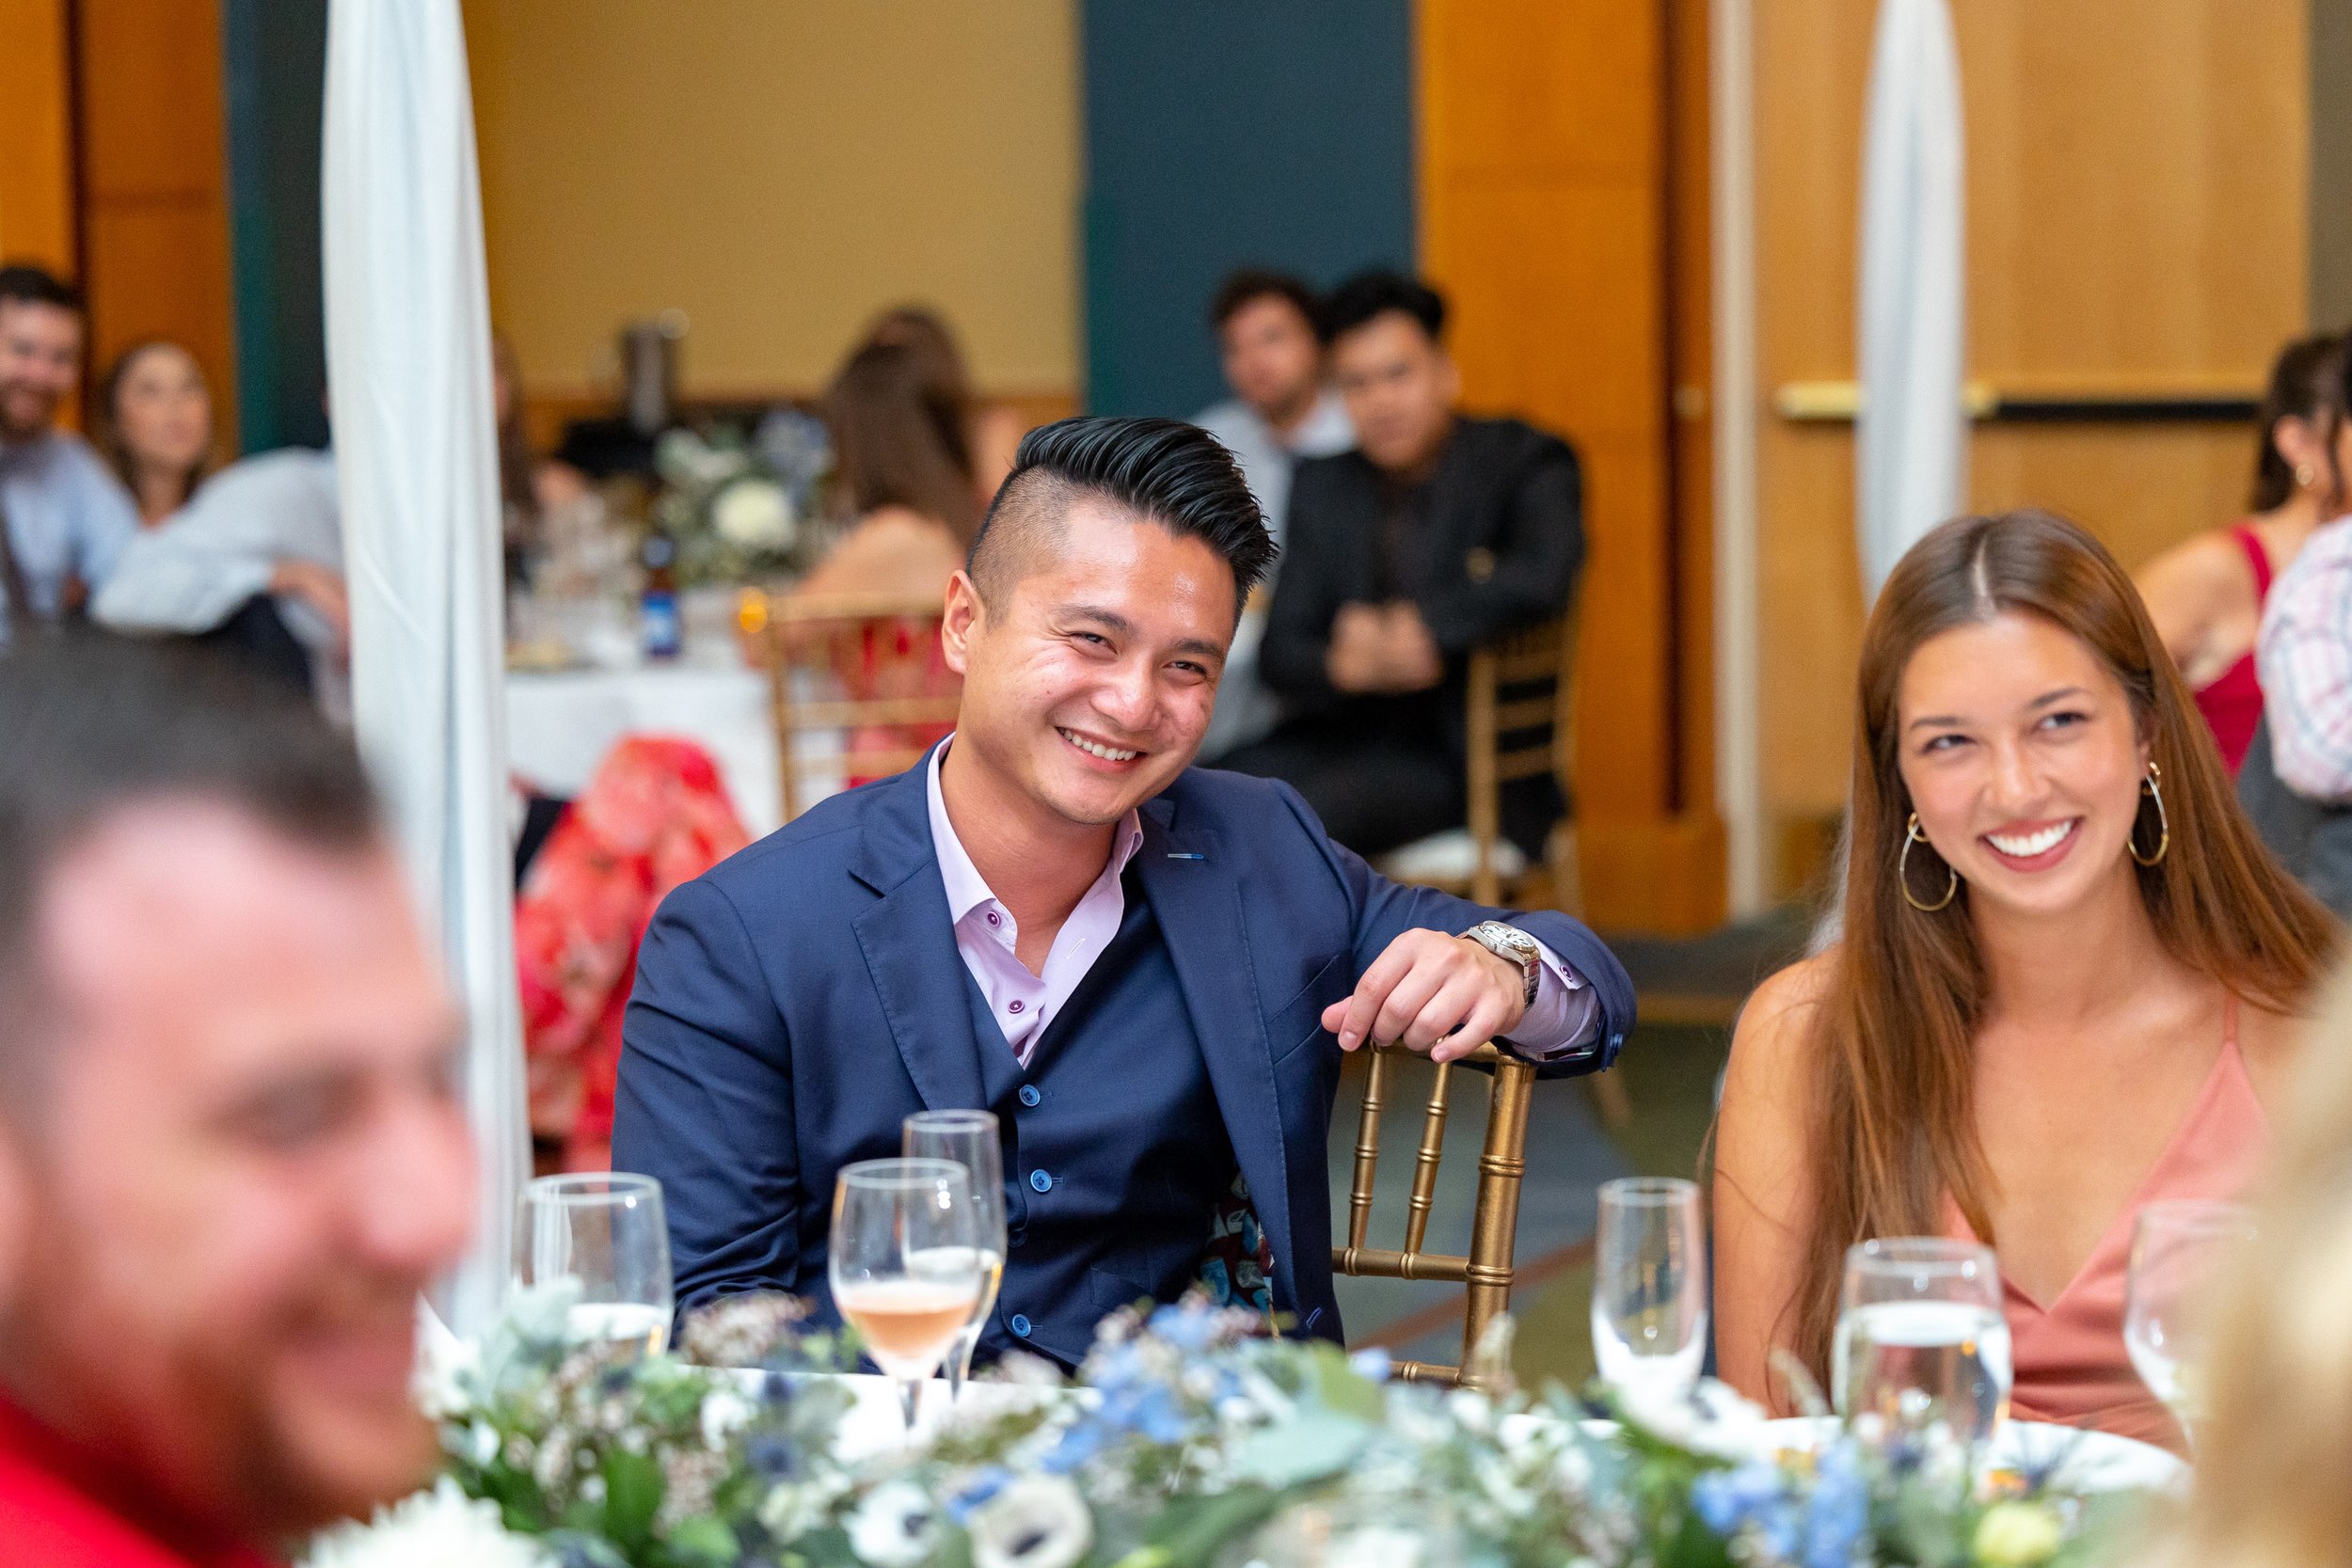 Fun wedding photographer takes candid photos of wedding guests in Washington DC